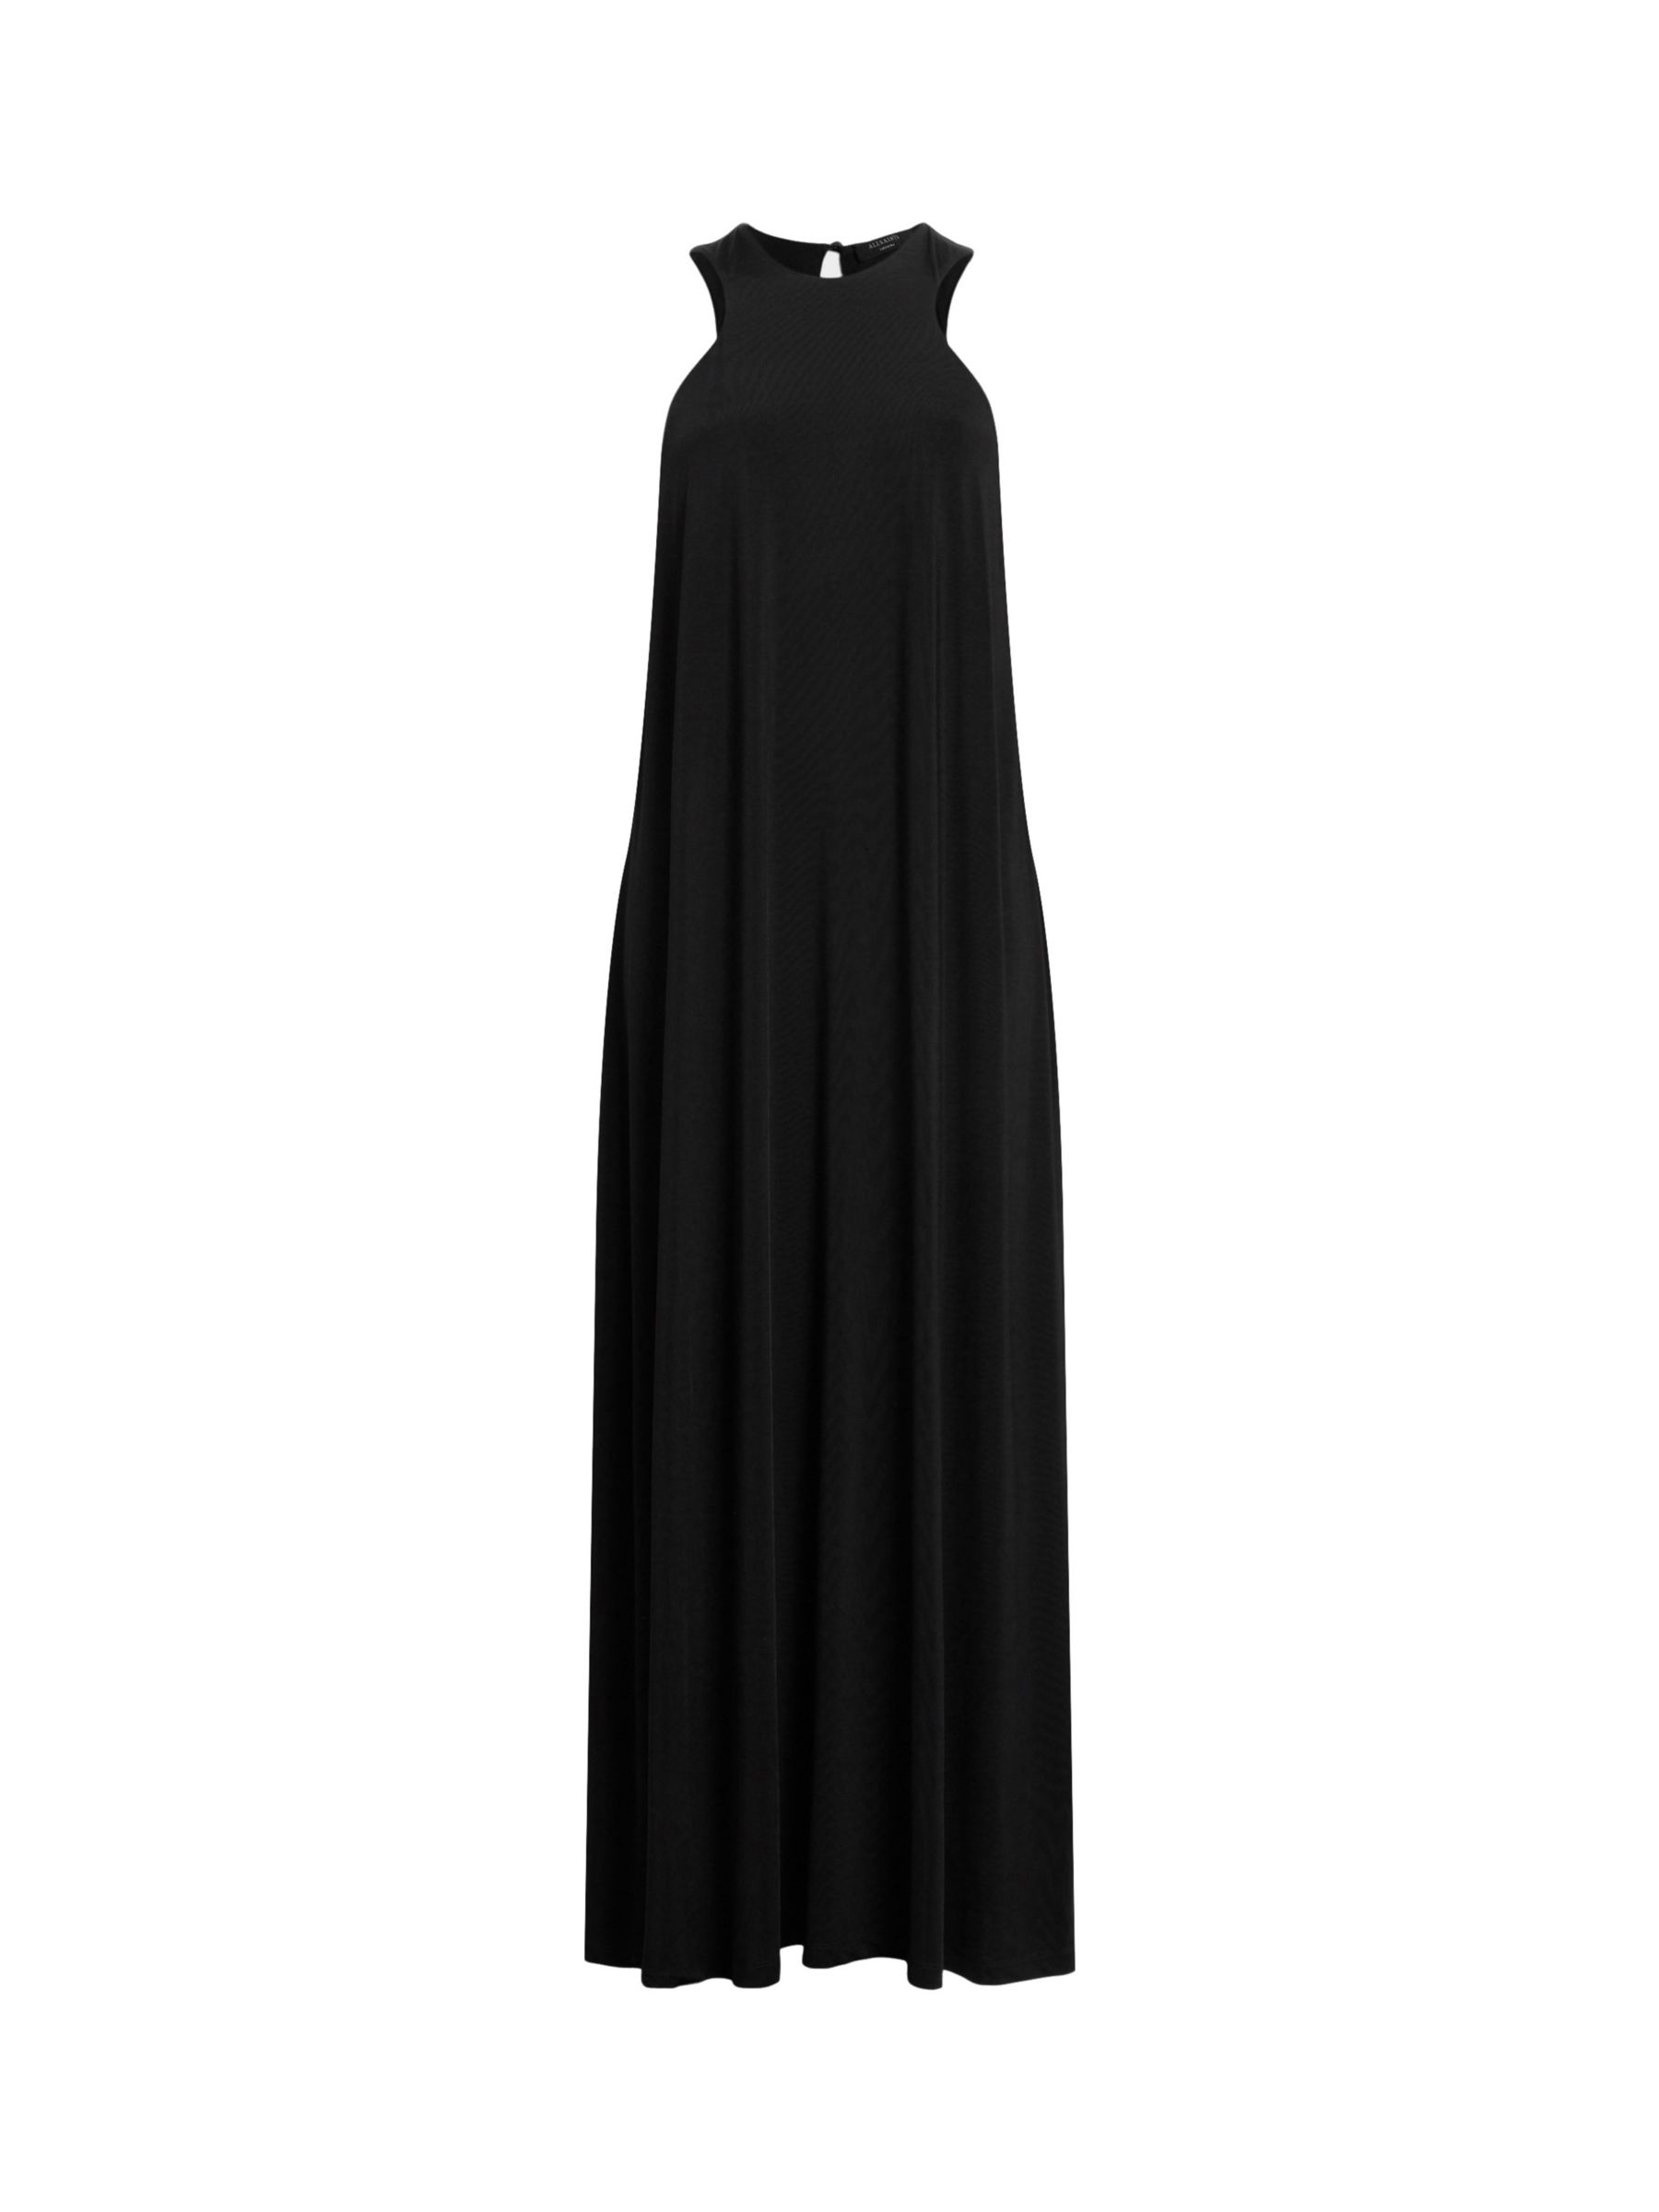 AllSaints Kura Maxi Dress, Black, 12